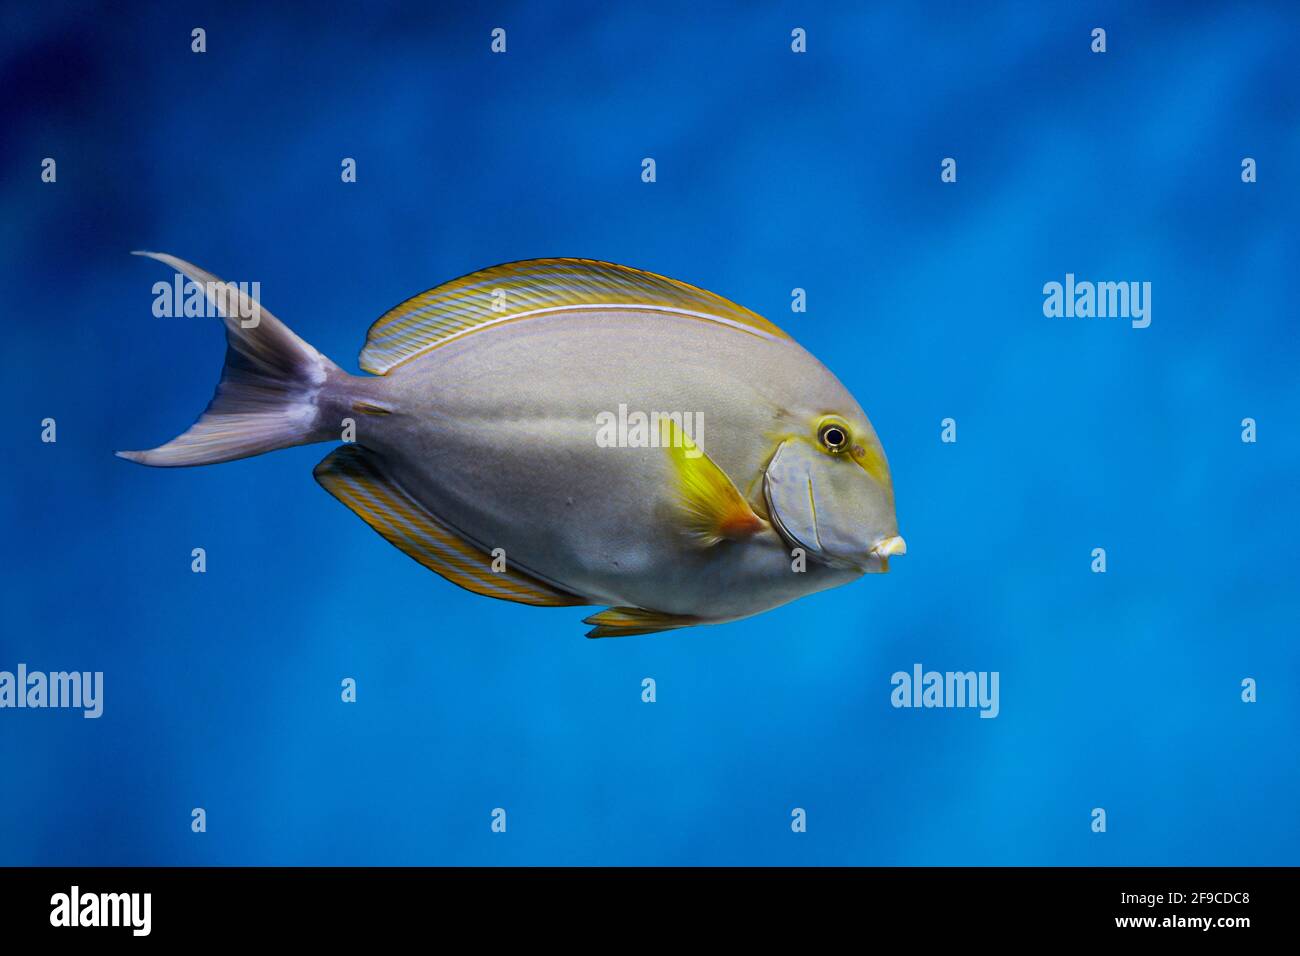 Pesce surgeonfish di pinna gialla, o pesce surgeonfish di Cuvier (Acanthurus xanthopterus) nuotano in acquario. Foto Stock